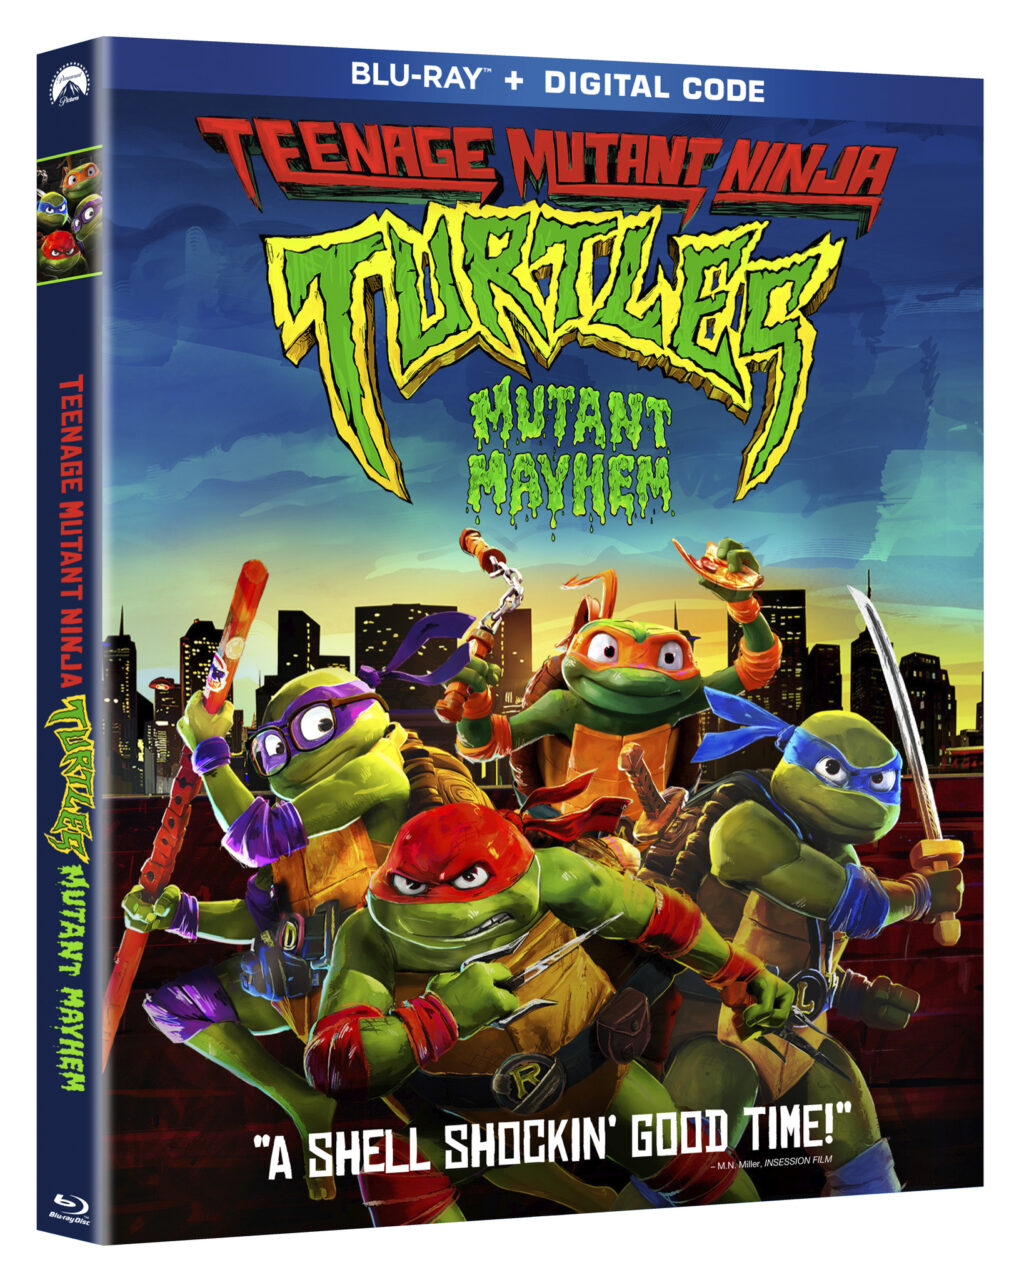 Teenage Mutant Ninja Turtles Mutant Mayhem Blu-Ray Combo pack cover (Paramount Home Entertainment)